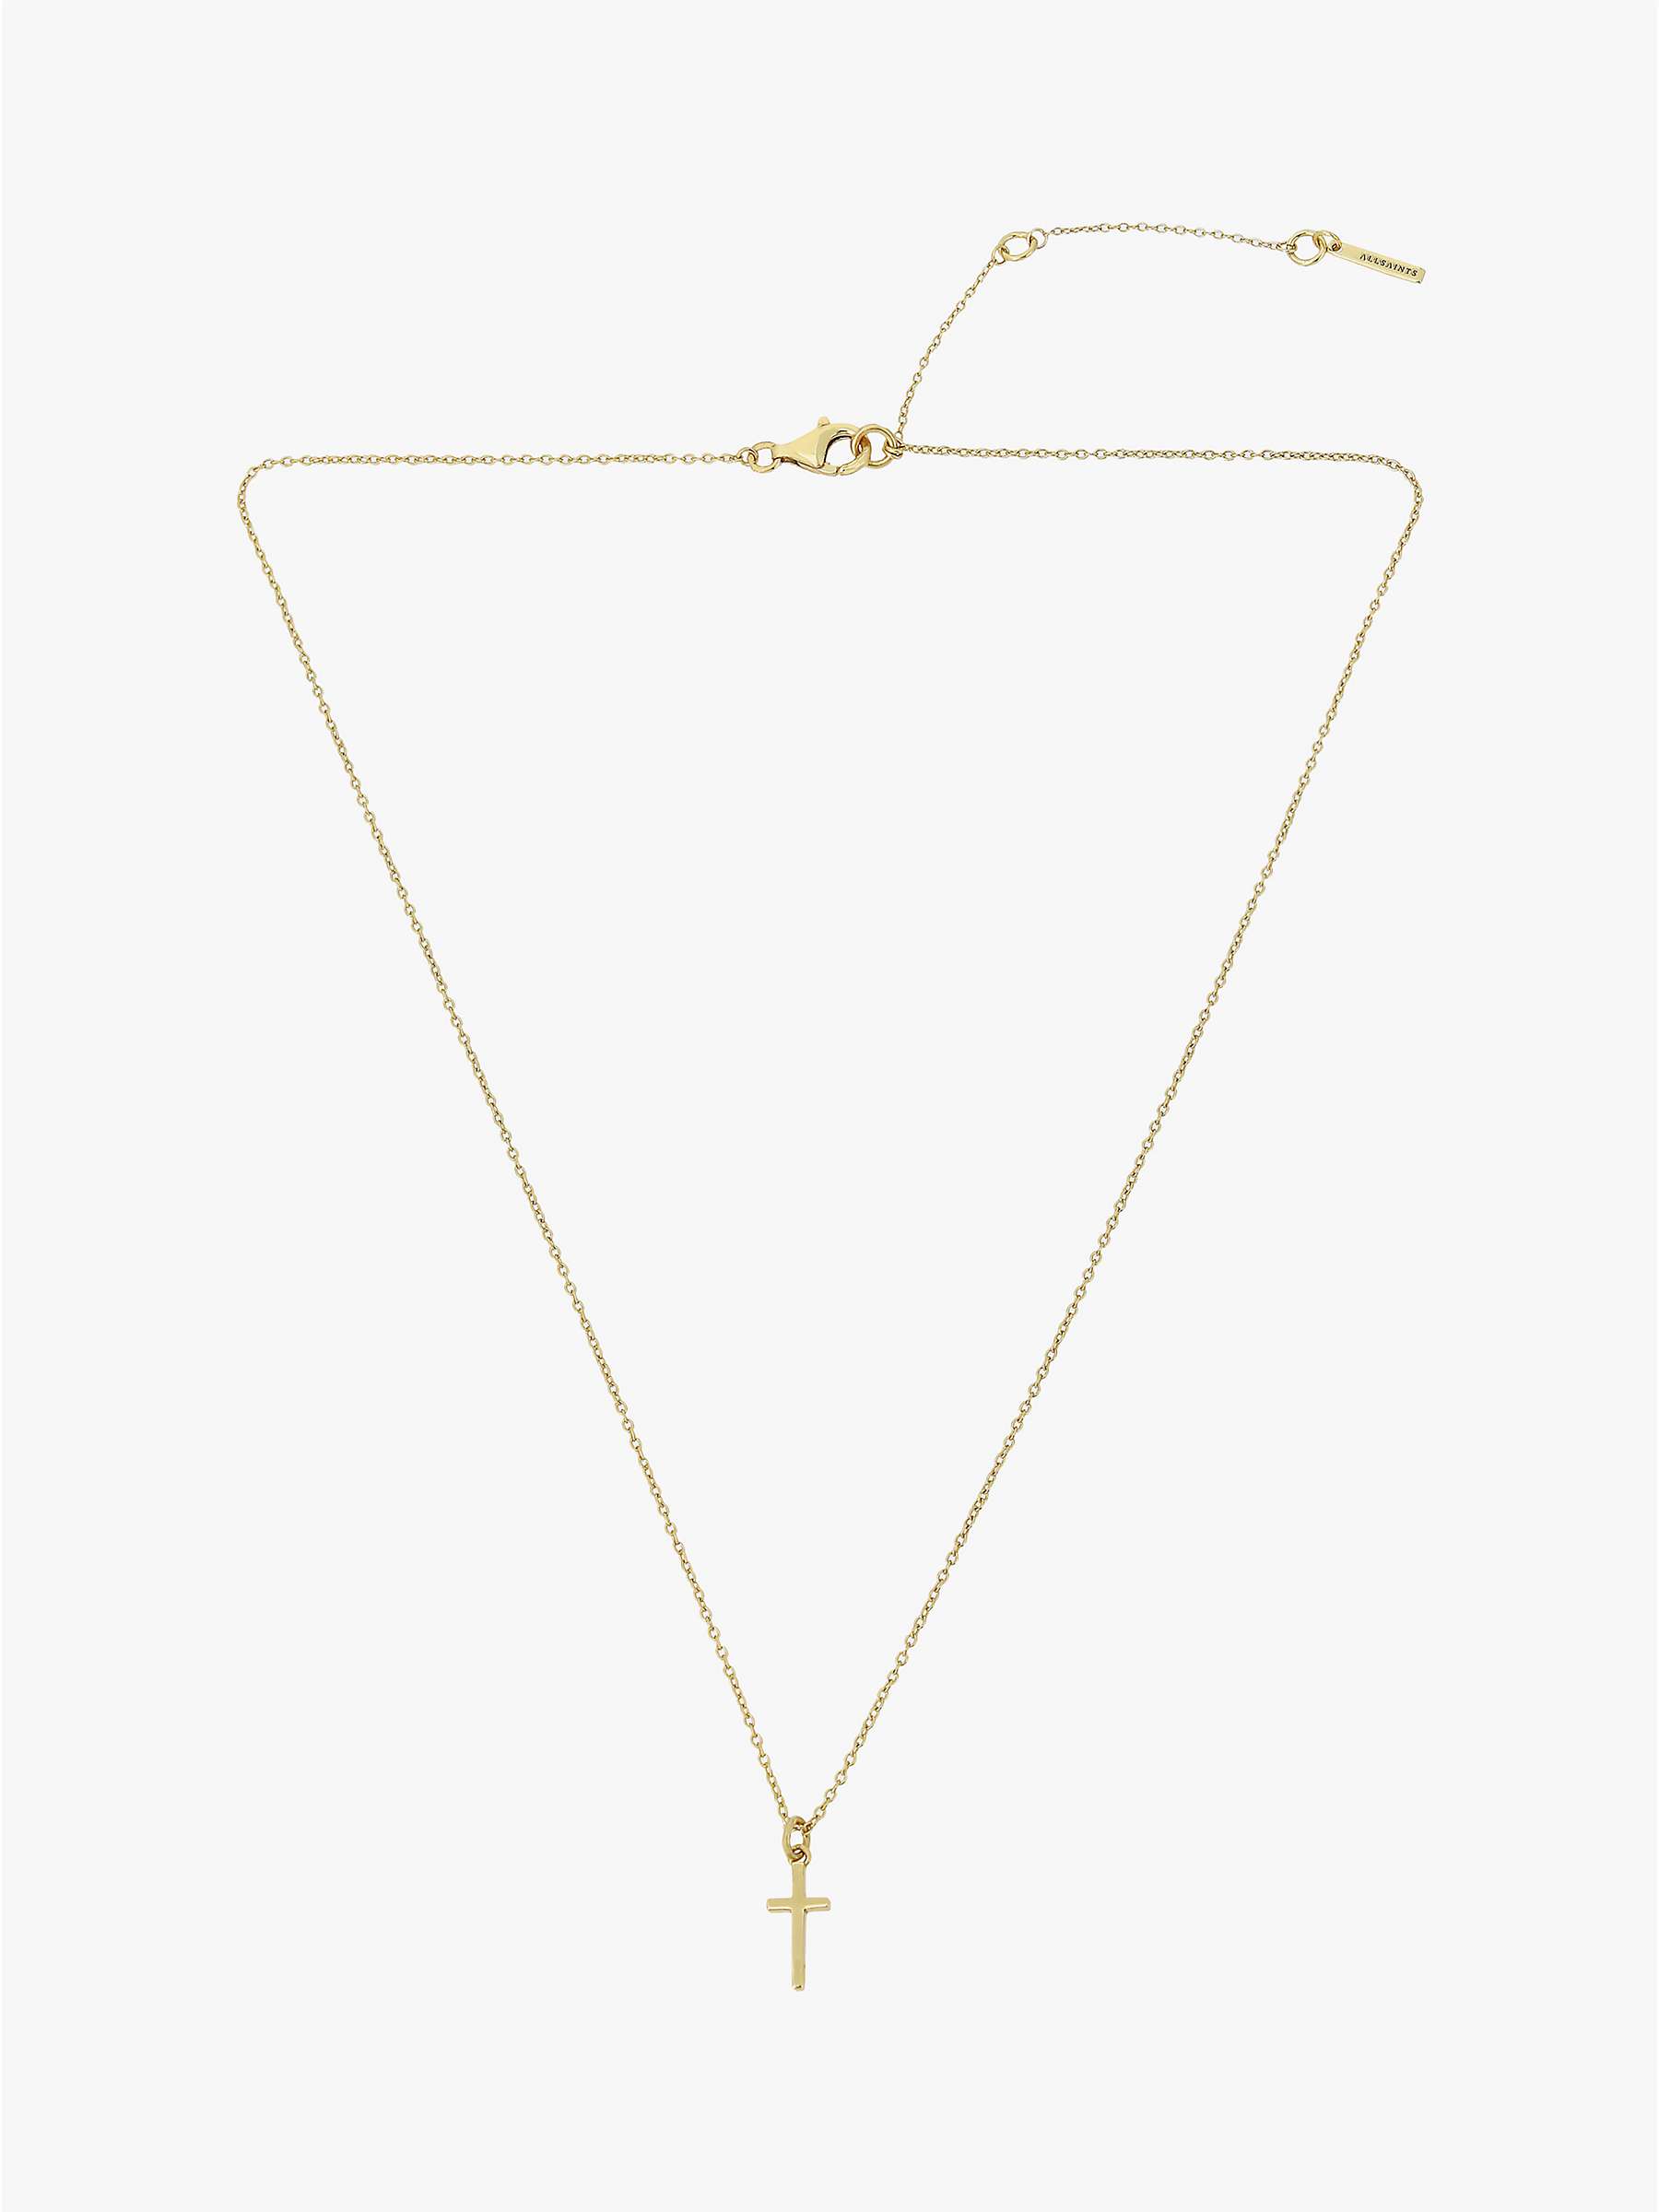 Buy AllSaints Cross Pendant Necklace, Gold Online at johnlewis.com